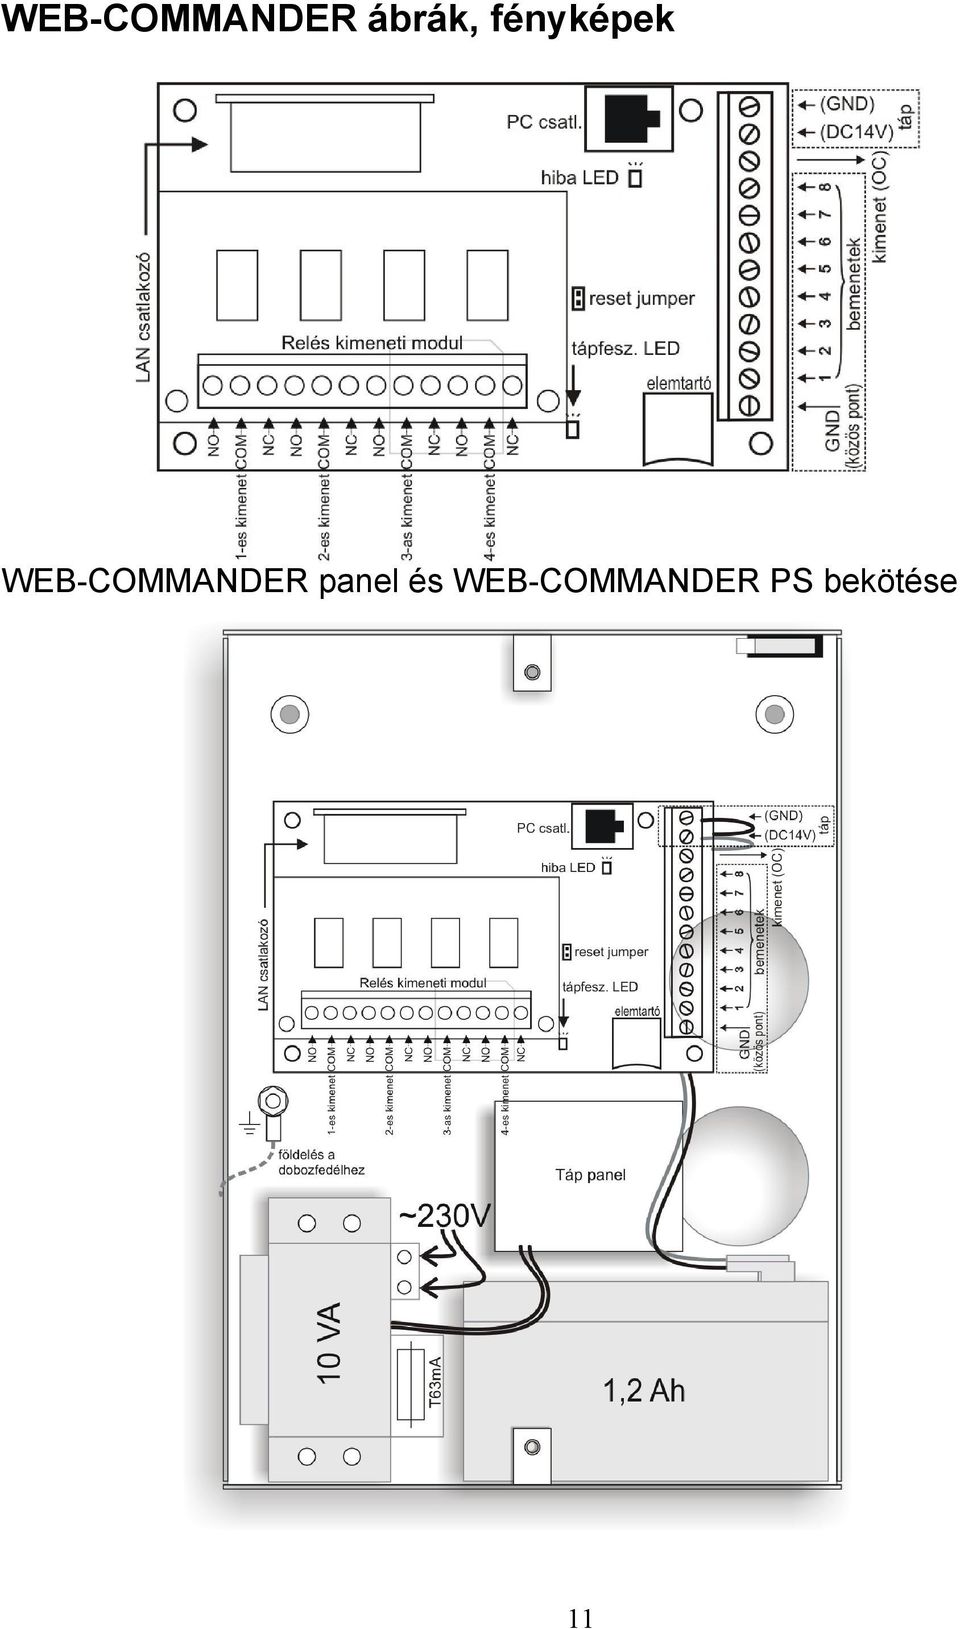 WEB-COMMANDER panel